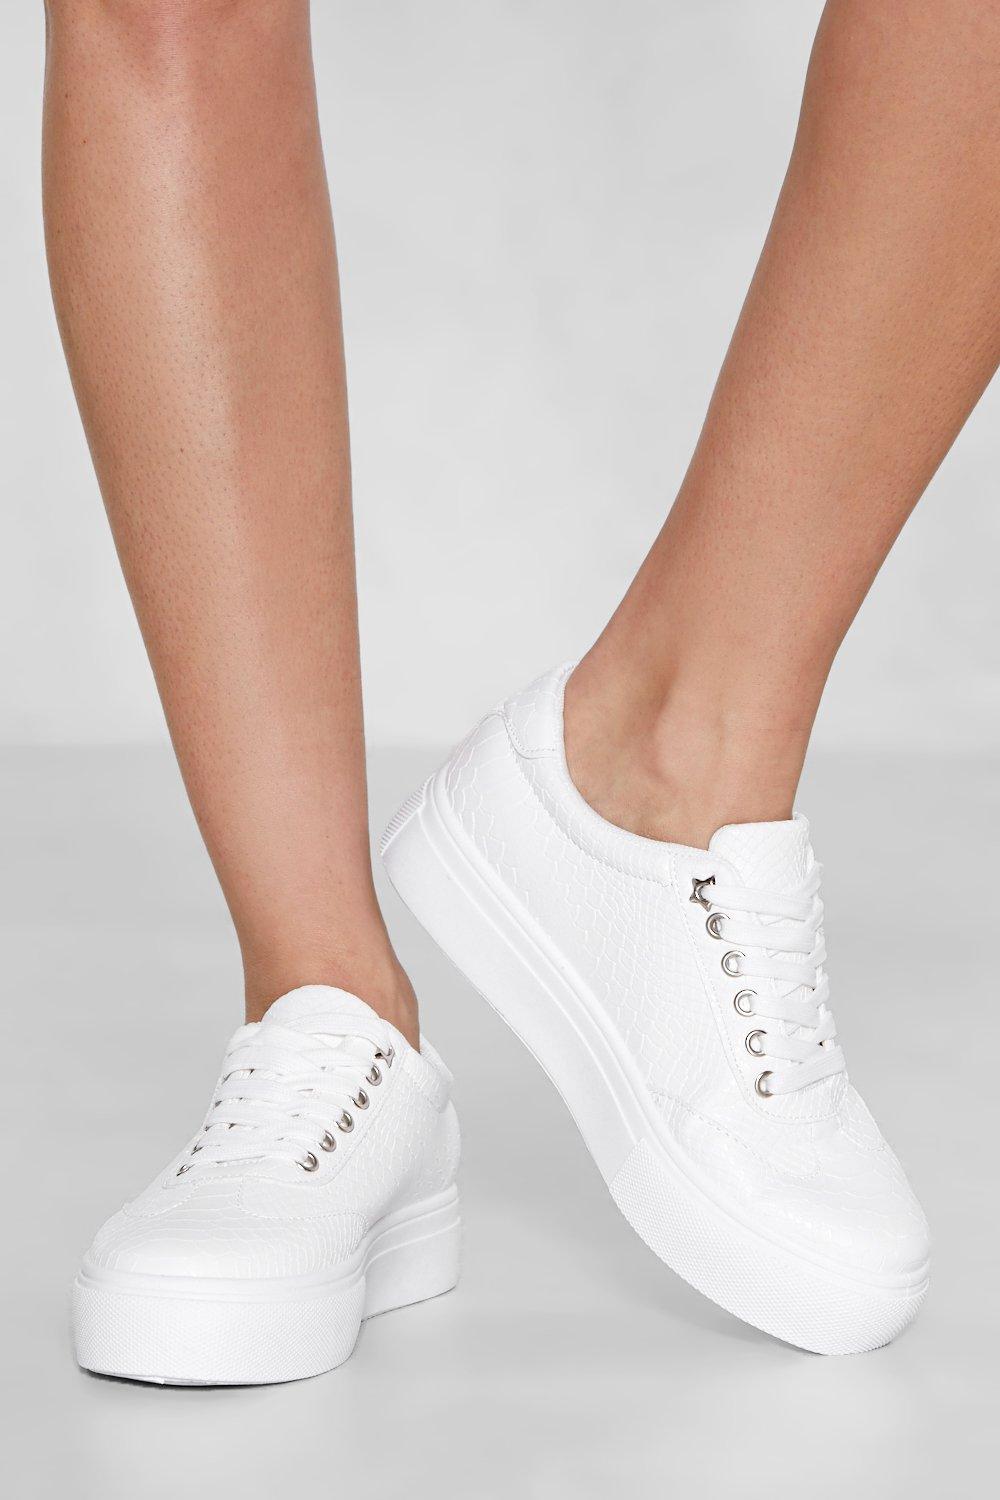 white croc tennis shoes